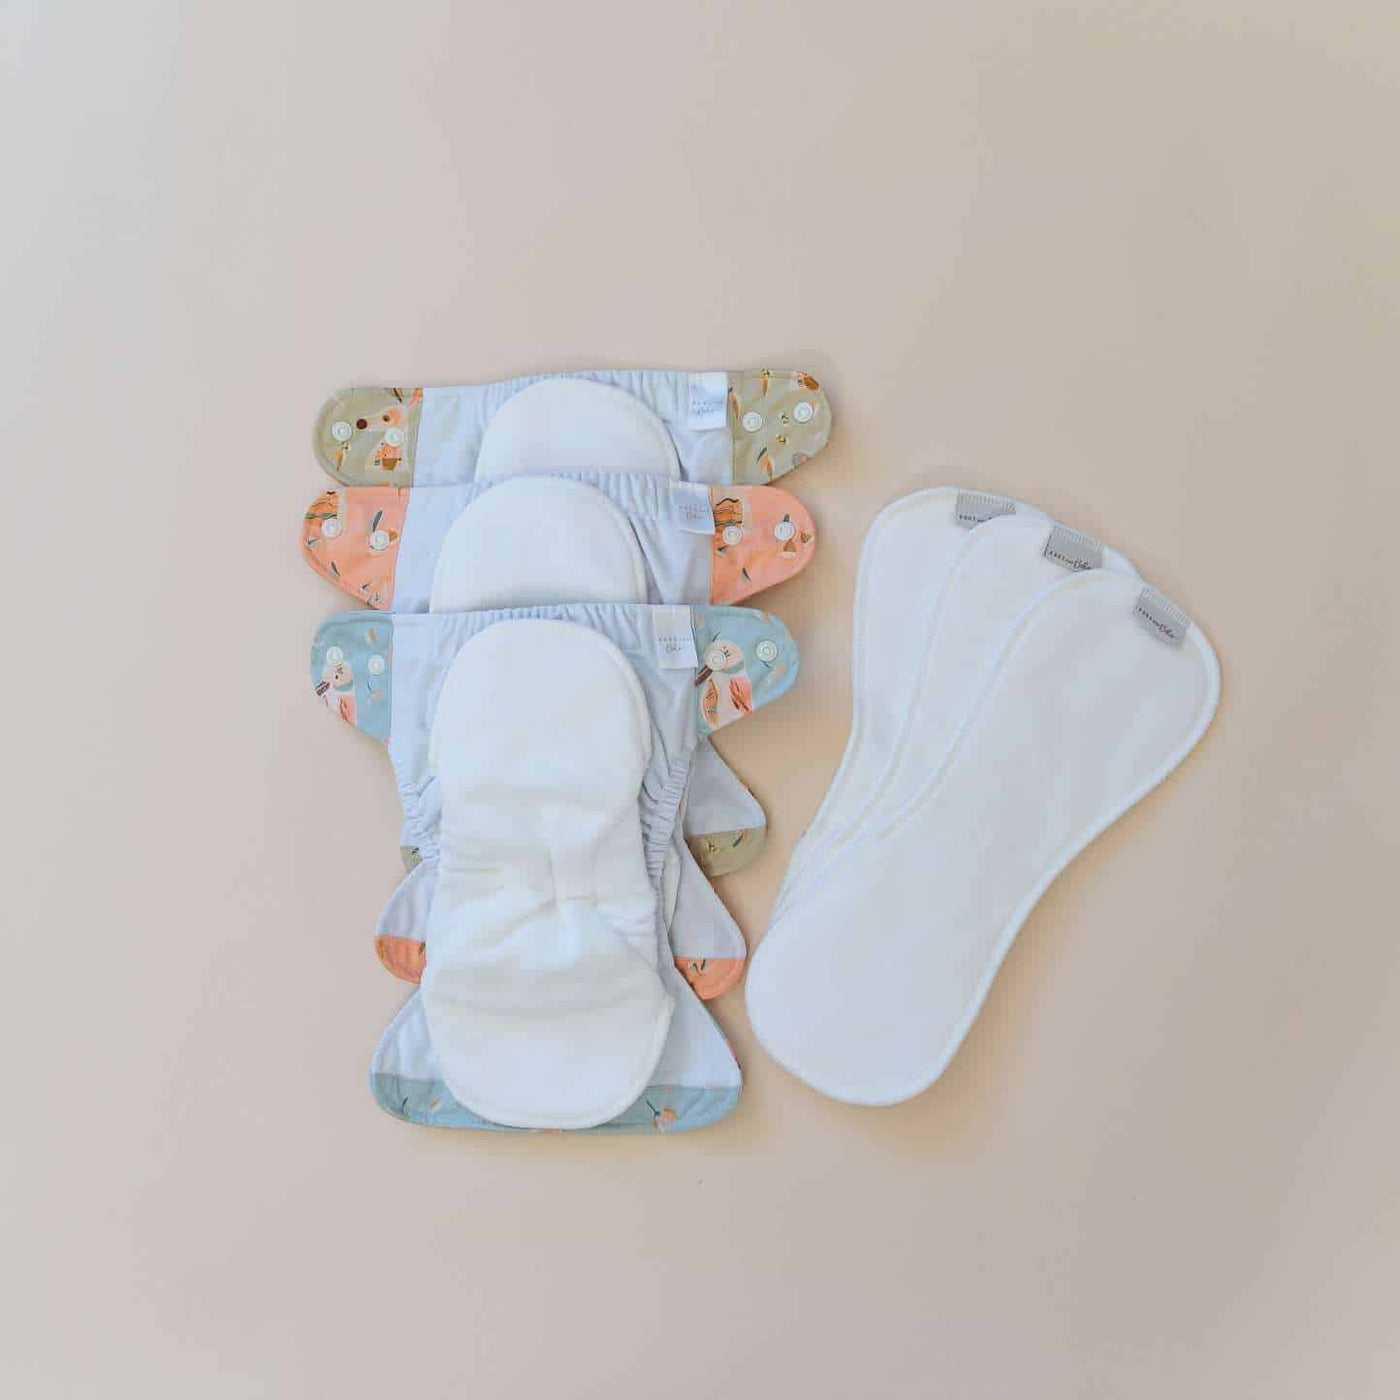 Bare and Boho AiO Soft Cover Set Habitat Diapers